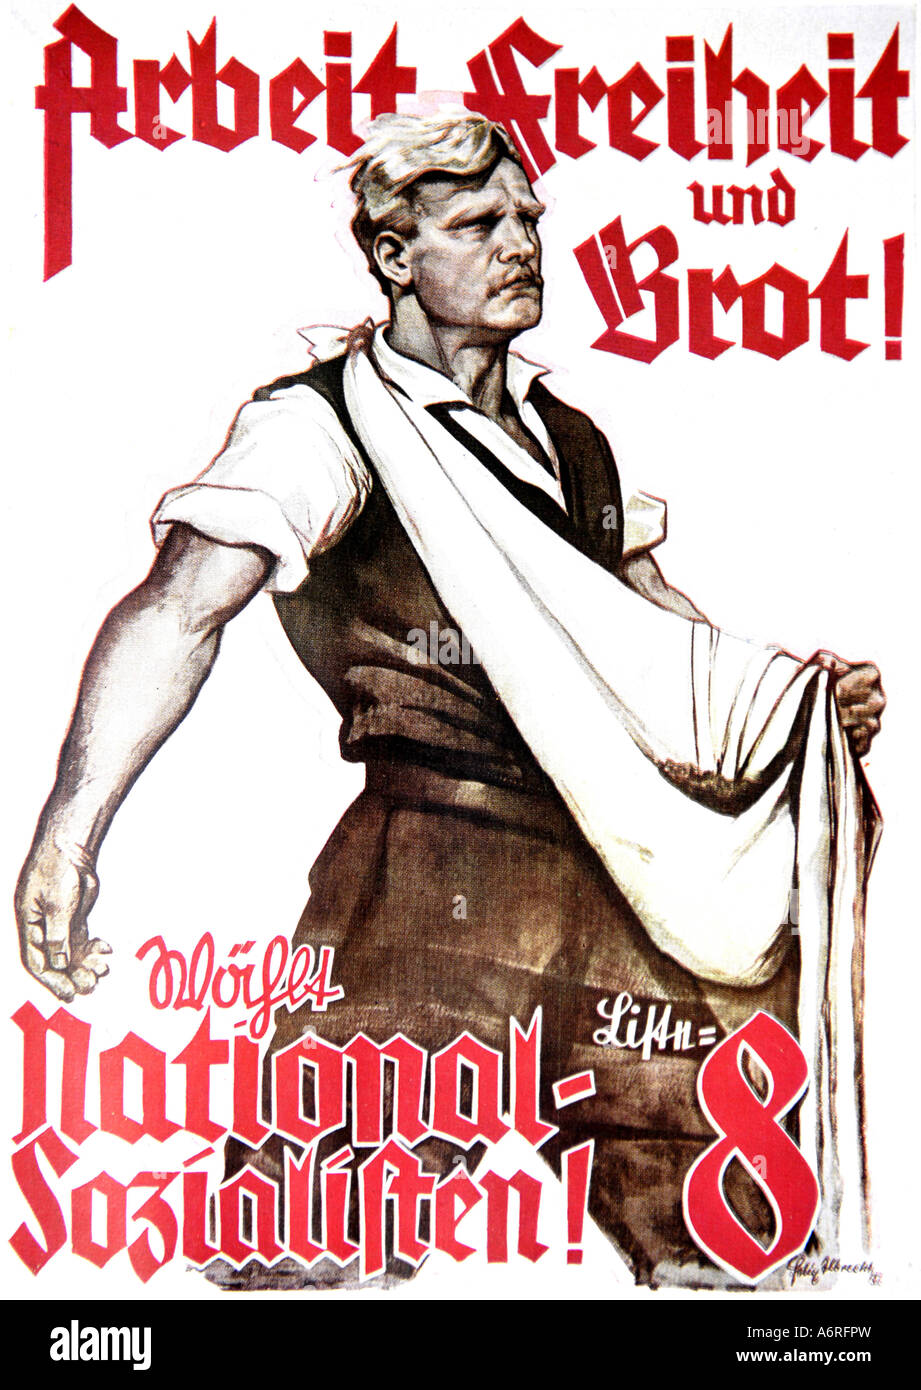 arbeit freiheit und brot poster red white black nazism national socialism  sozialisten1933 1945 germany history heritage fascist Stock Photo